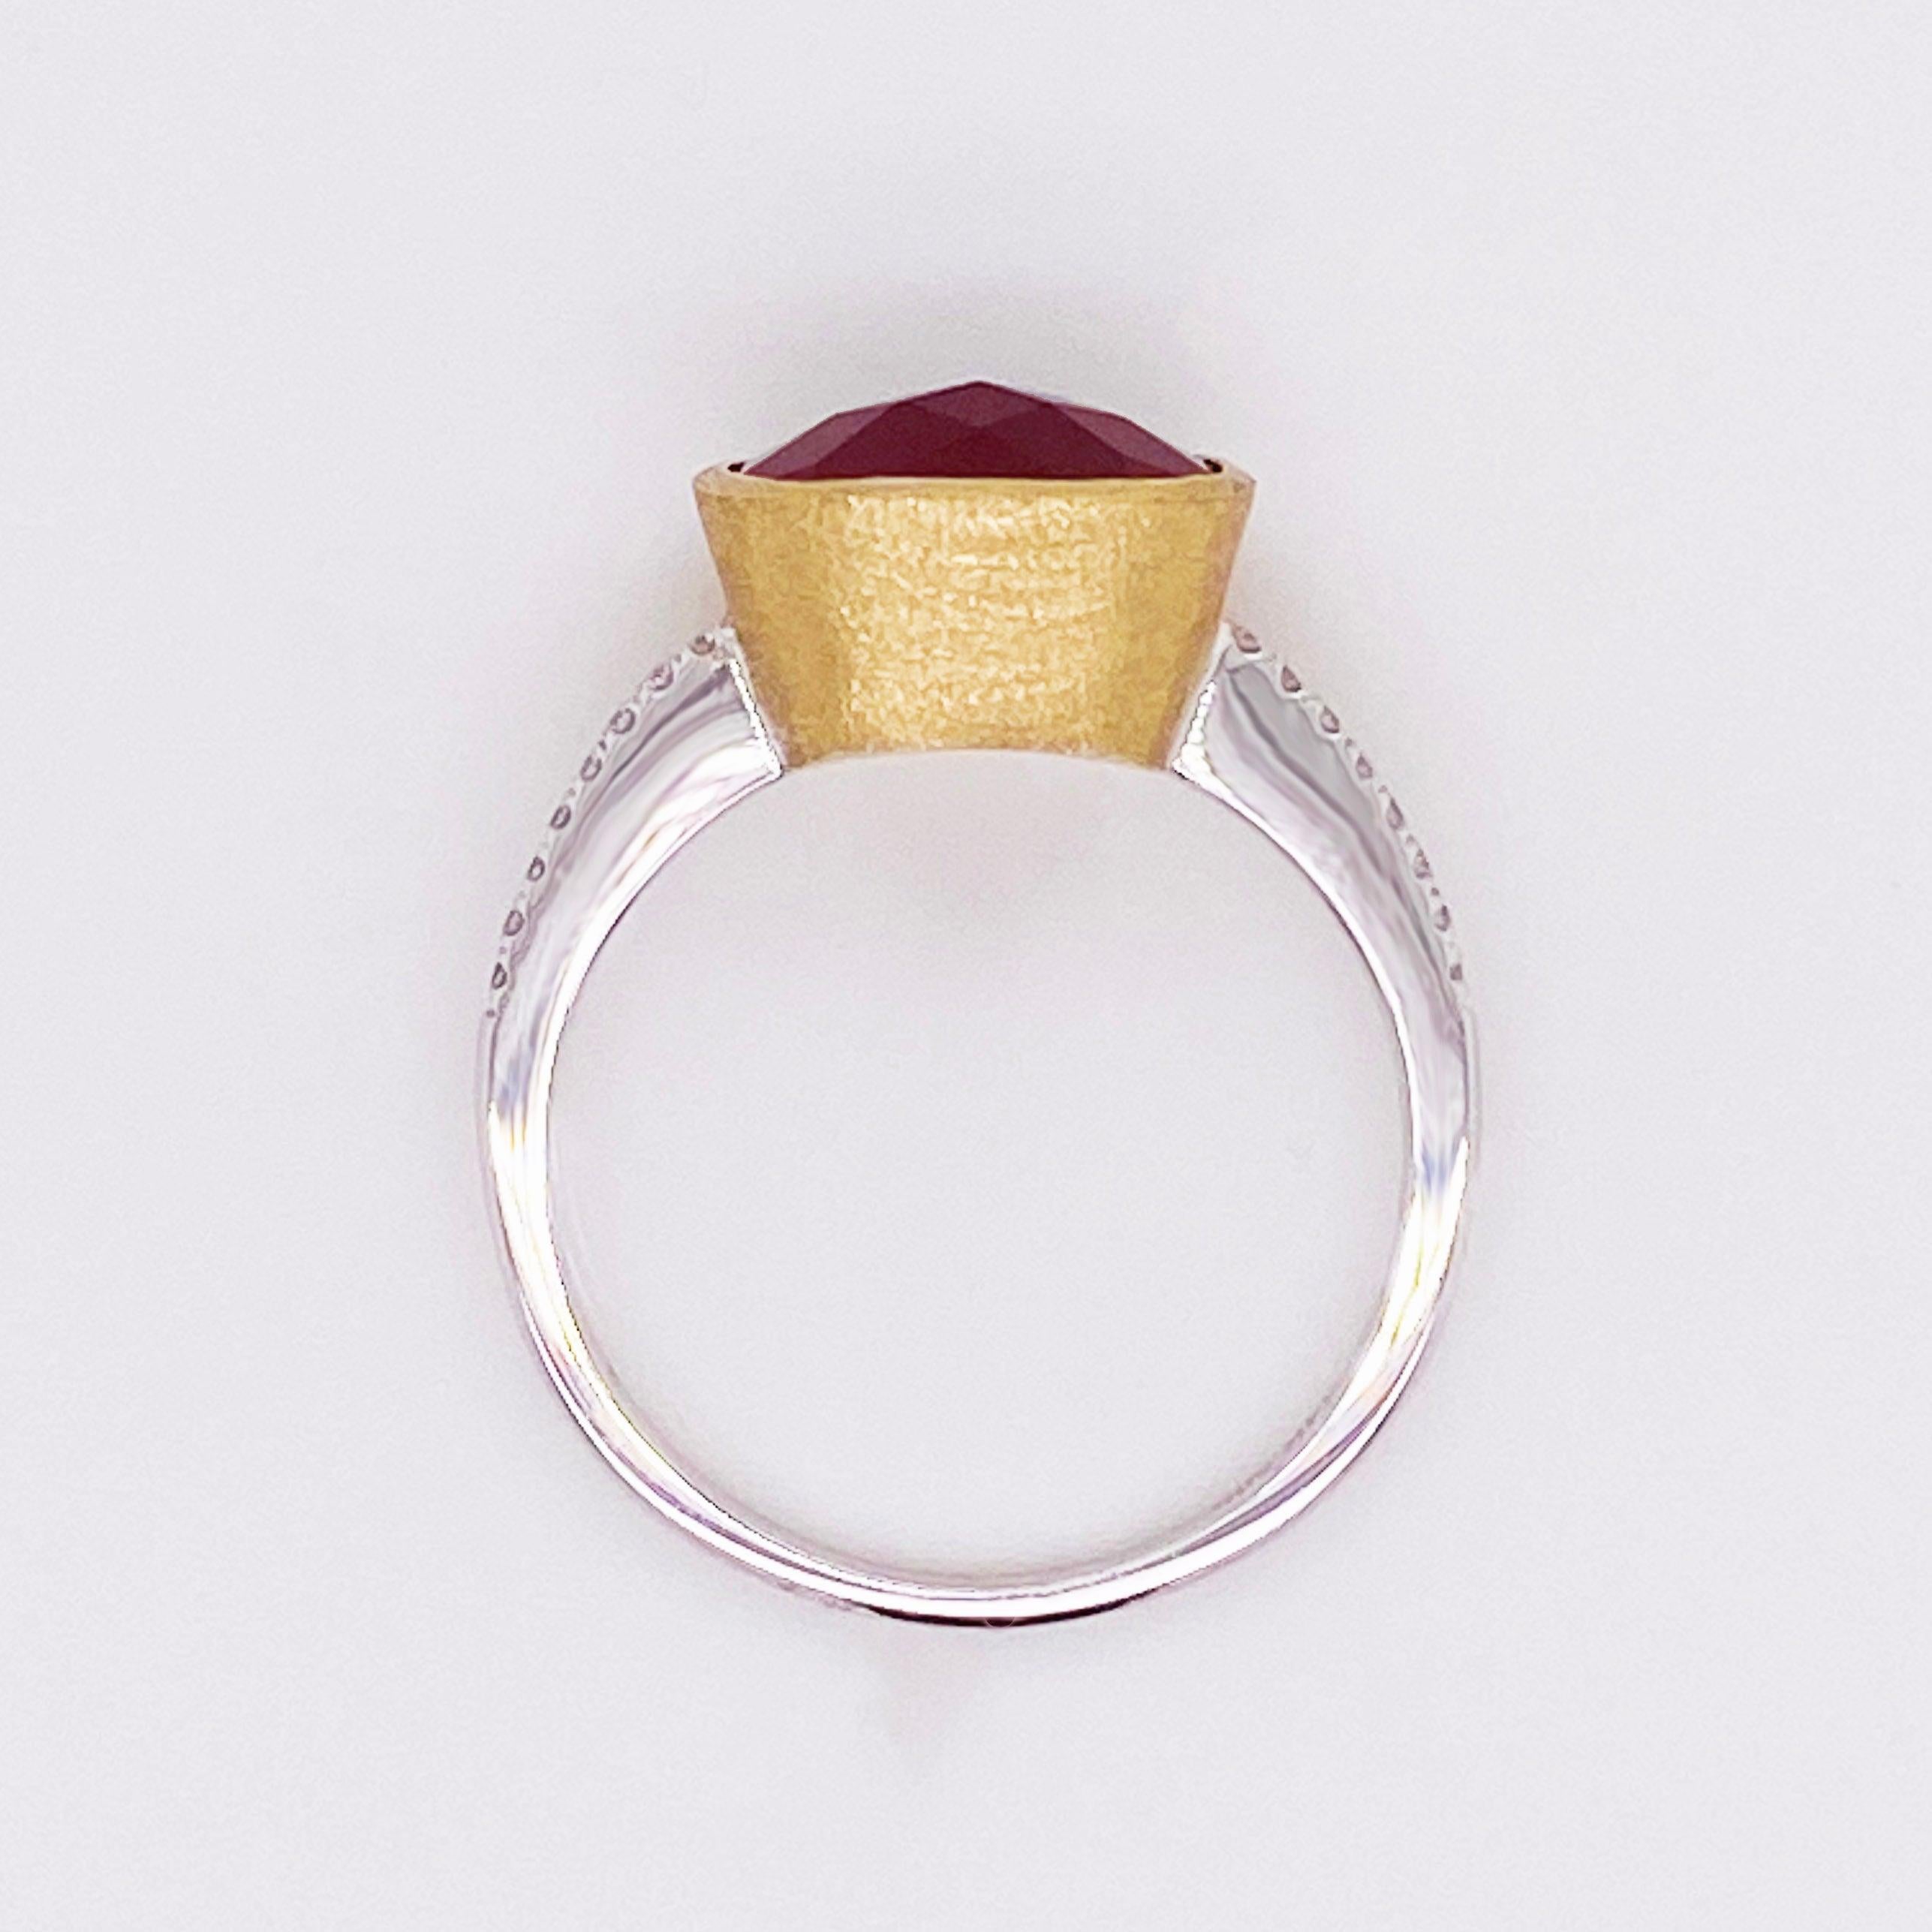 For Sale:  Garnet Diamond Ring, Red Garnet, Mixed Metal, 14k White and Yellow Gold, Satin 4